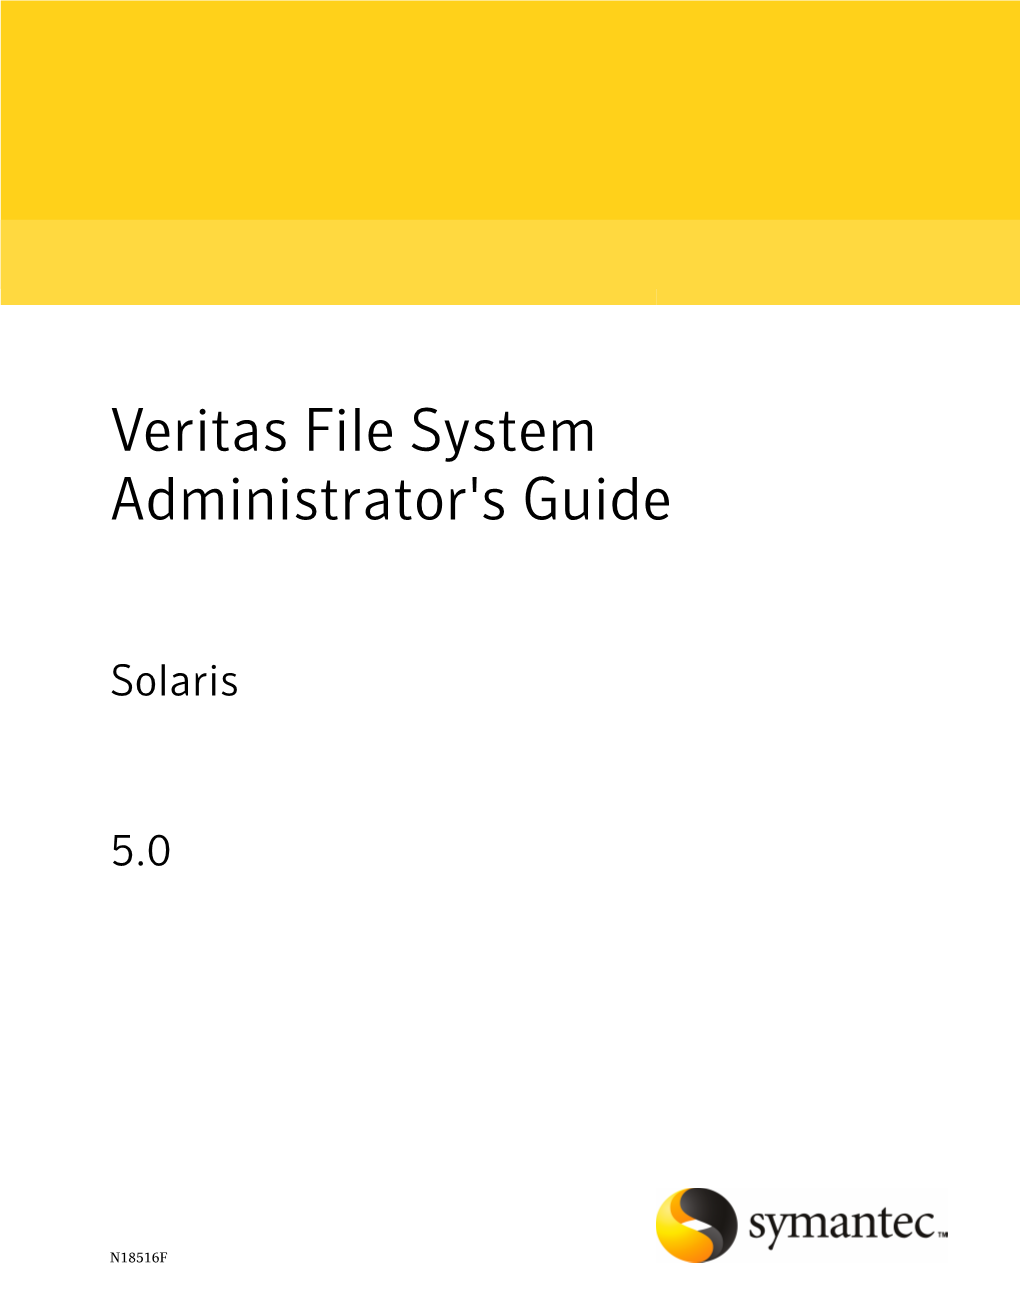 Veritas File System Administrator's Guide